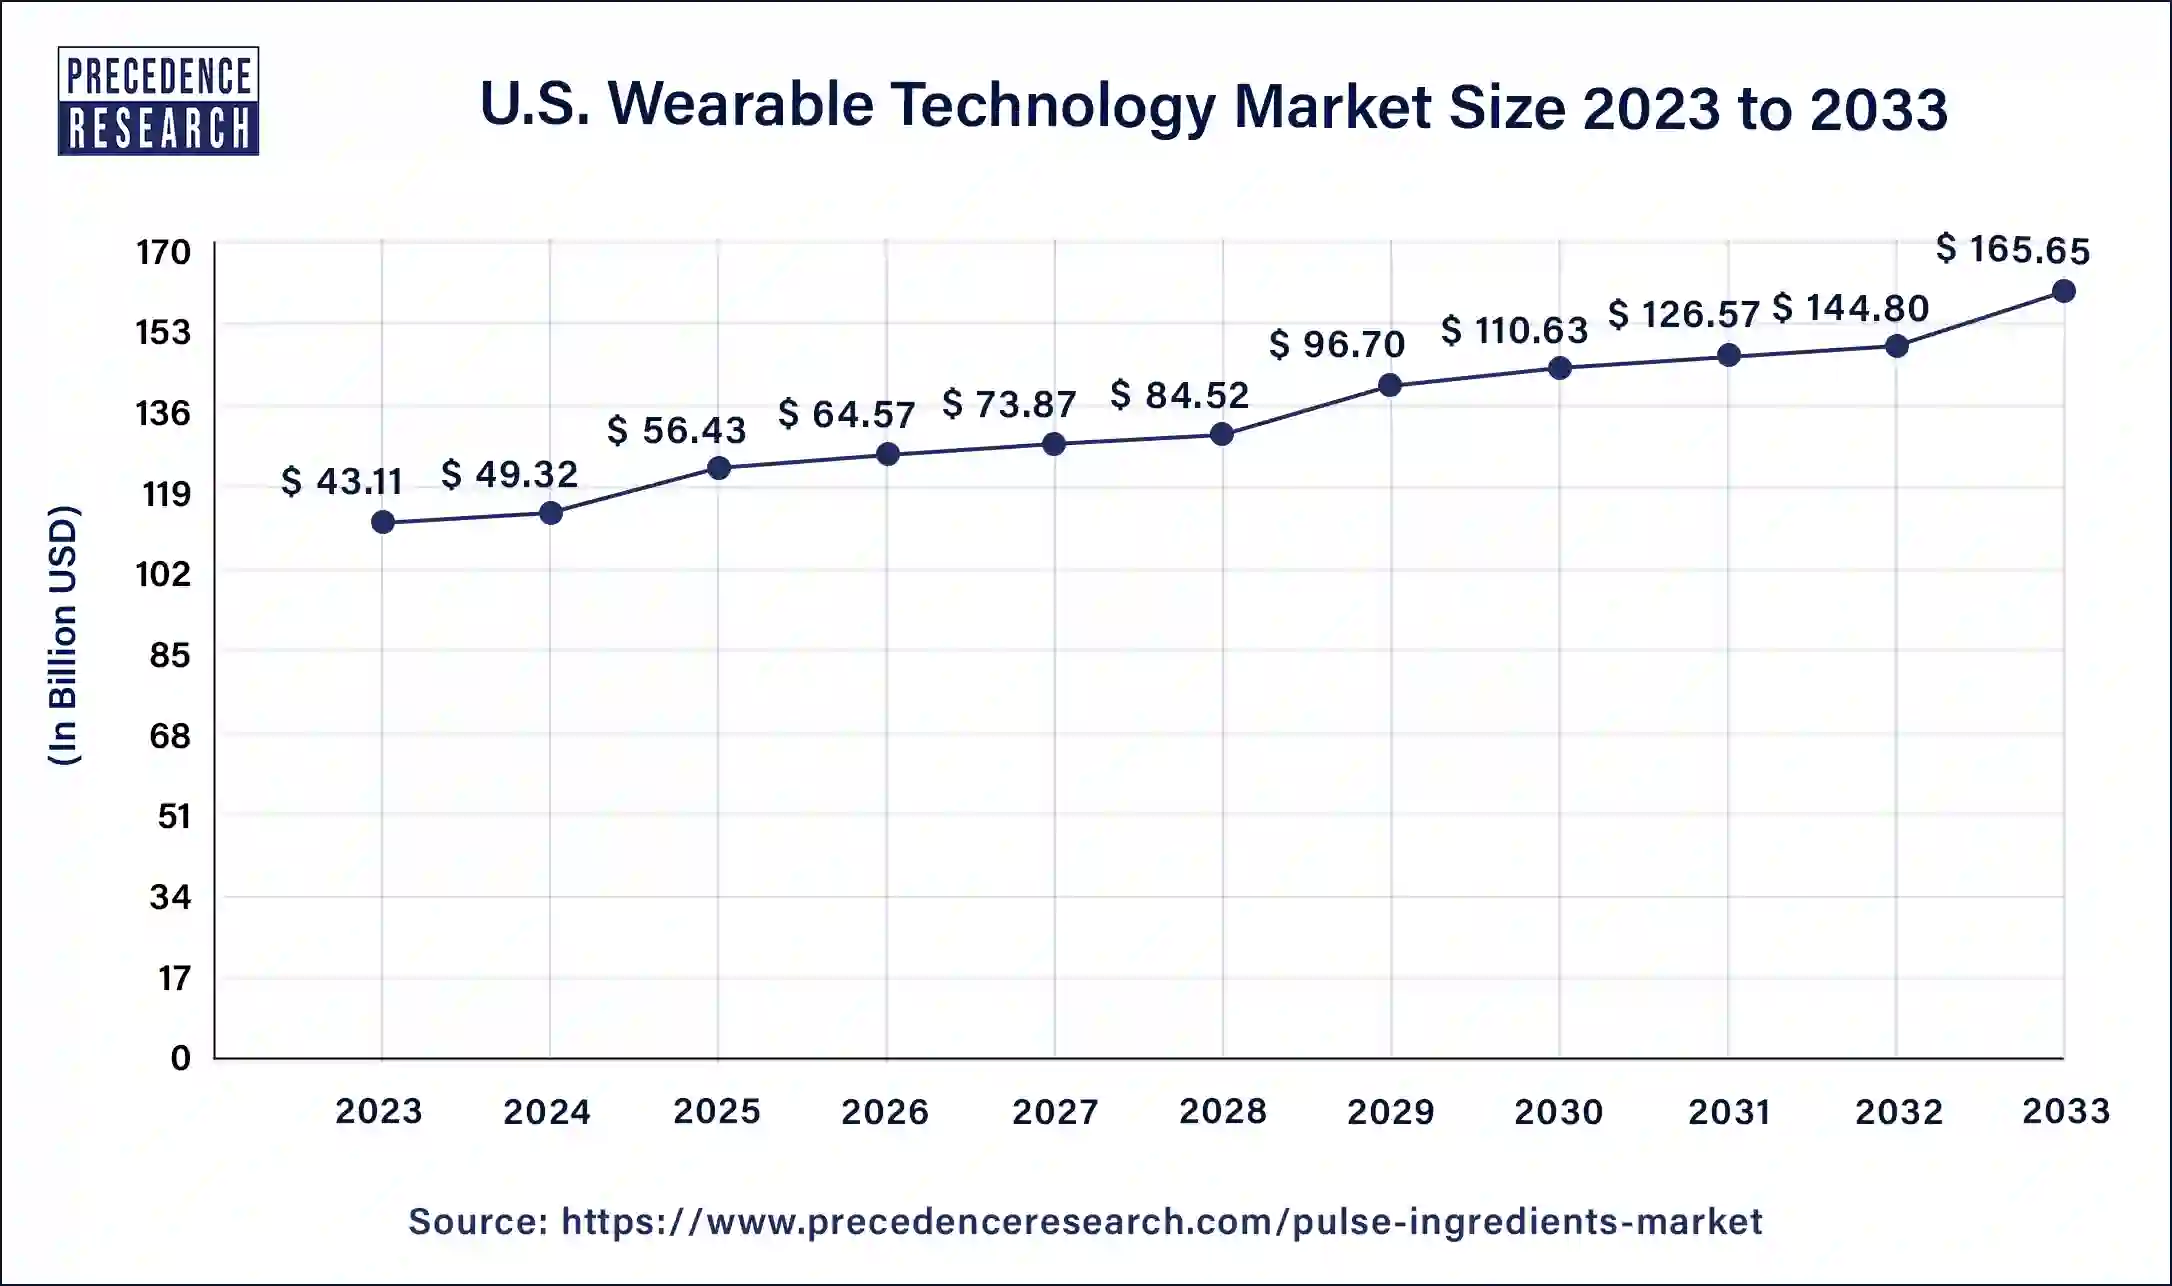 U.S. Wearable Technology Market Size 2024 to 2033